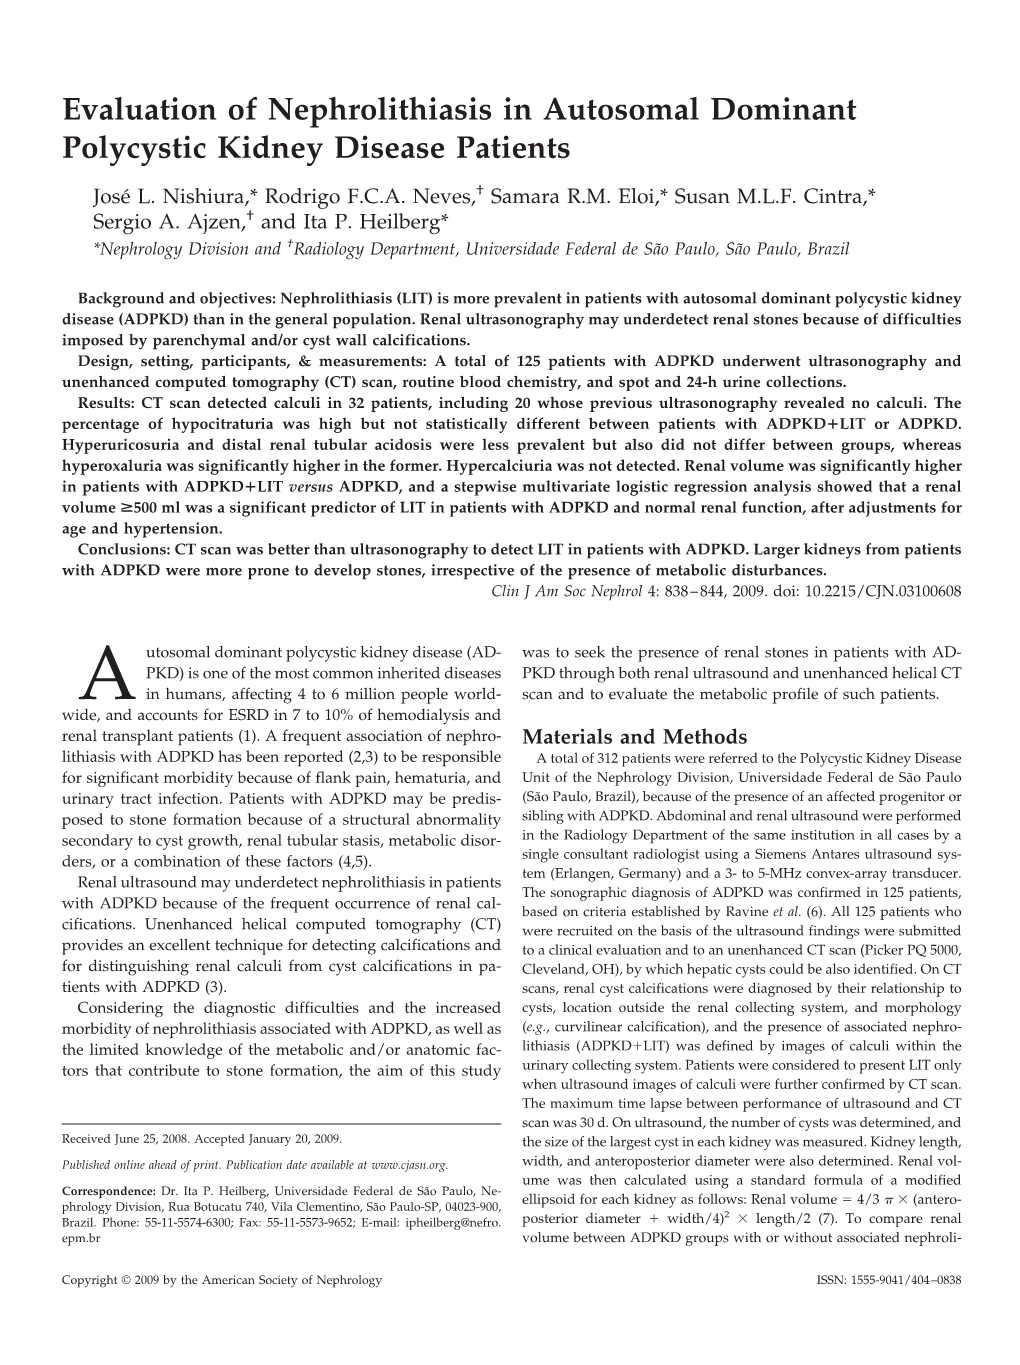 Evaluation of Nephrolithiasis in Autosomal Dominant Polycystic Kidney Disease Patients